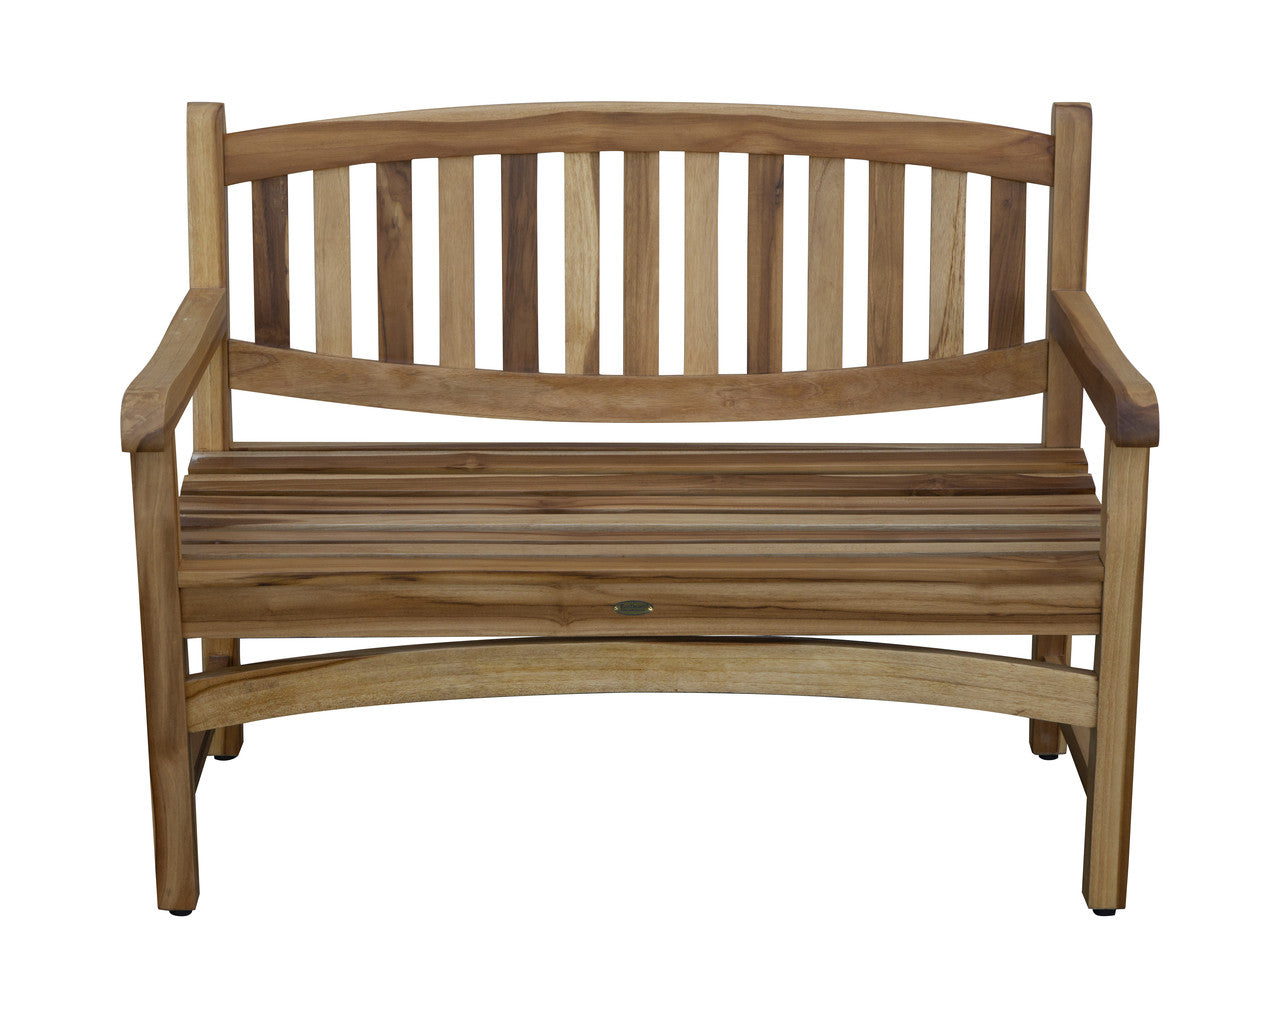 EcoDecors® Kent Garden 51" Teak Wood Outdoor Bench in EarthyTeak Finish